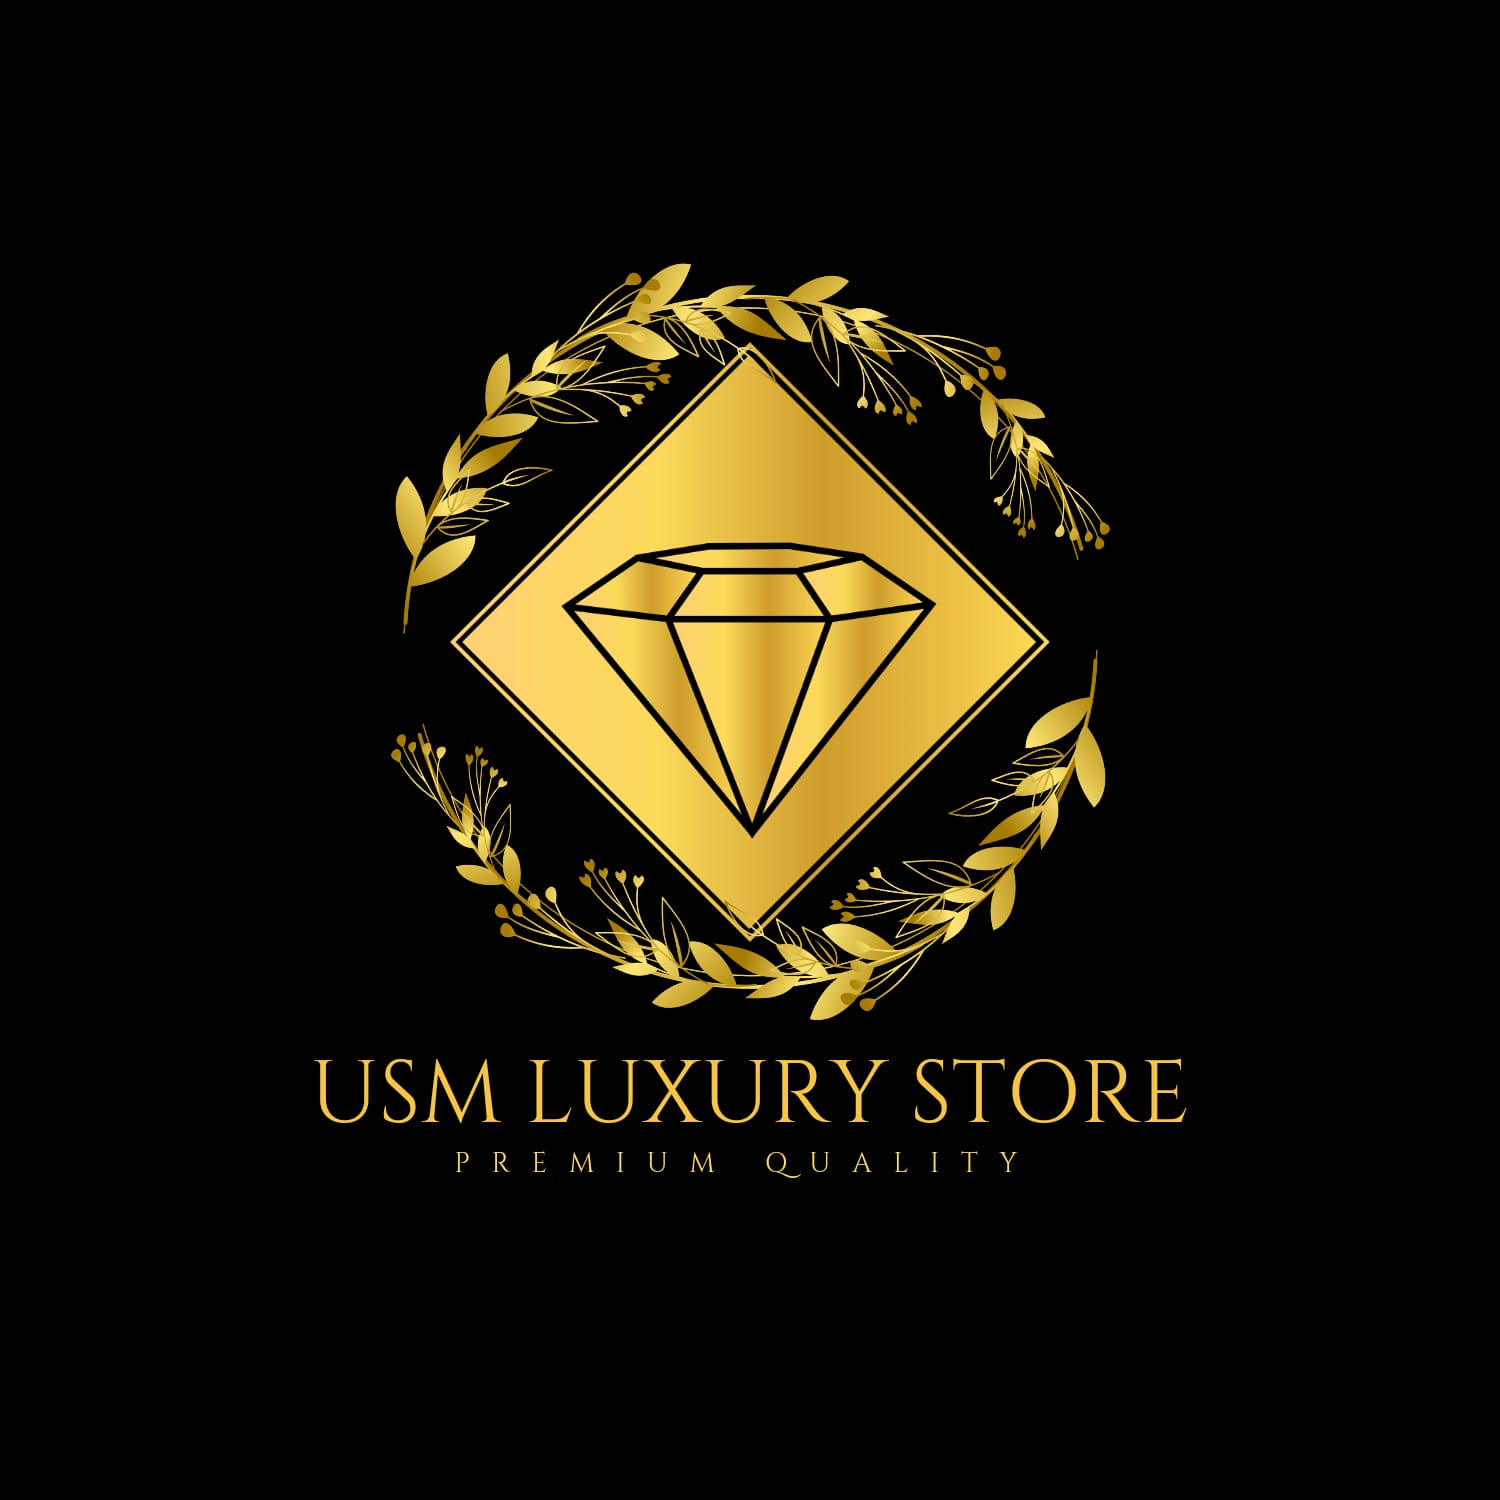 Gold diamond logo on a black background.